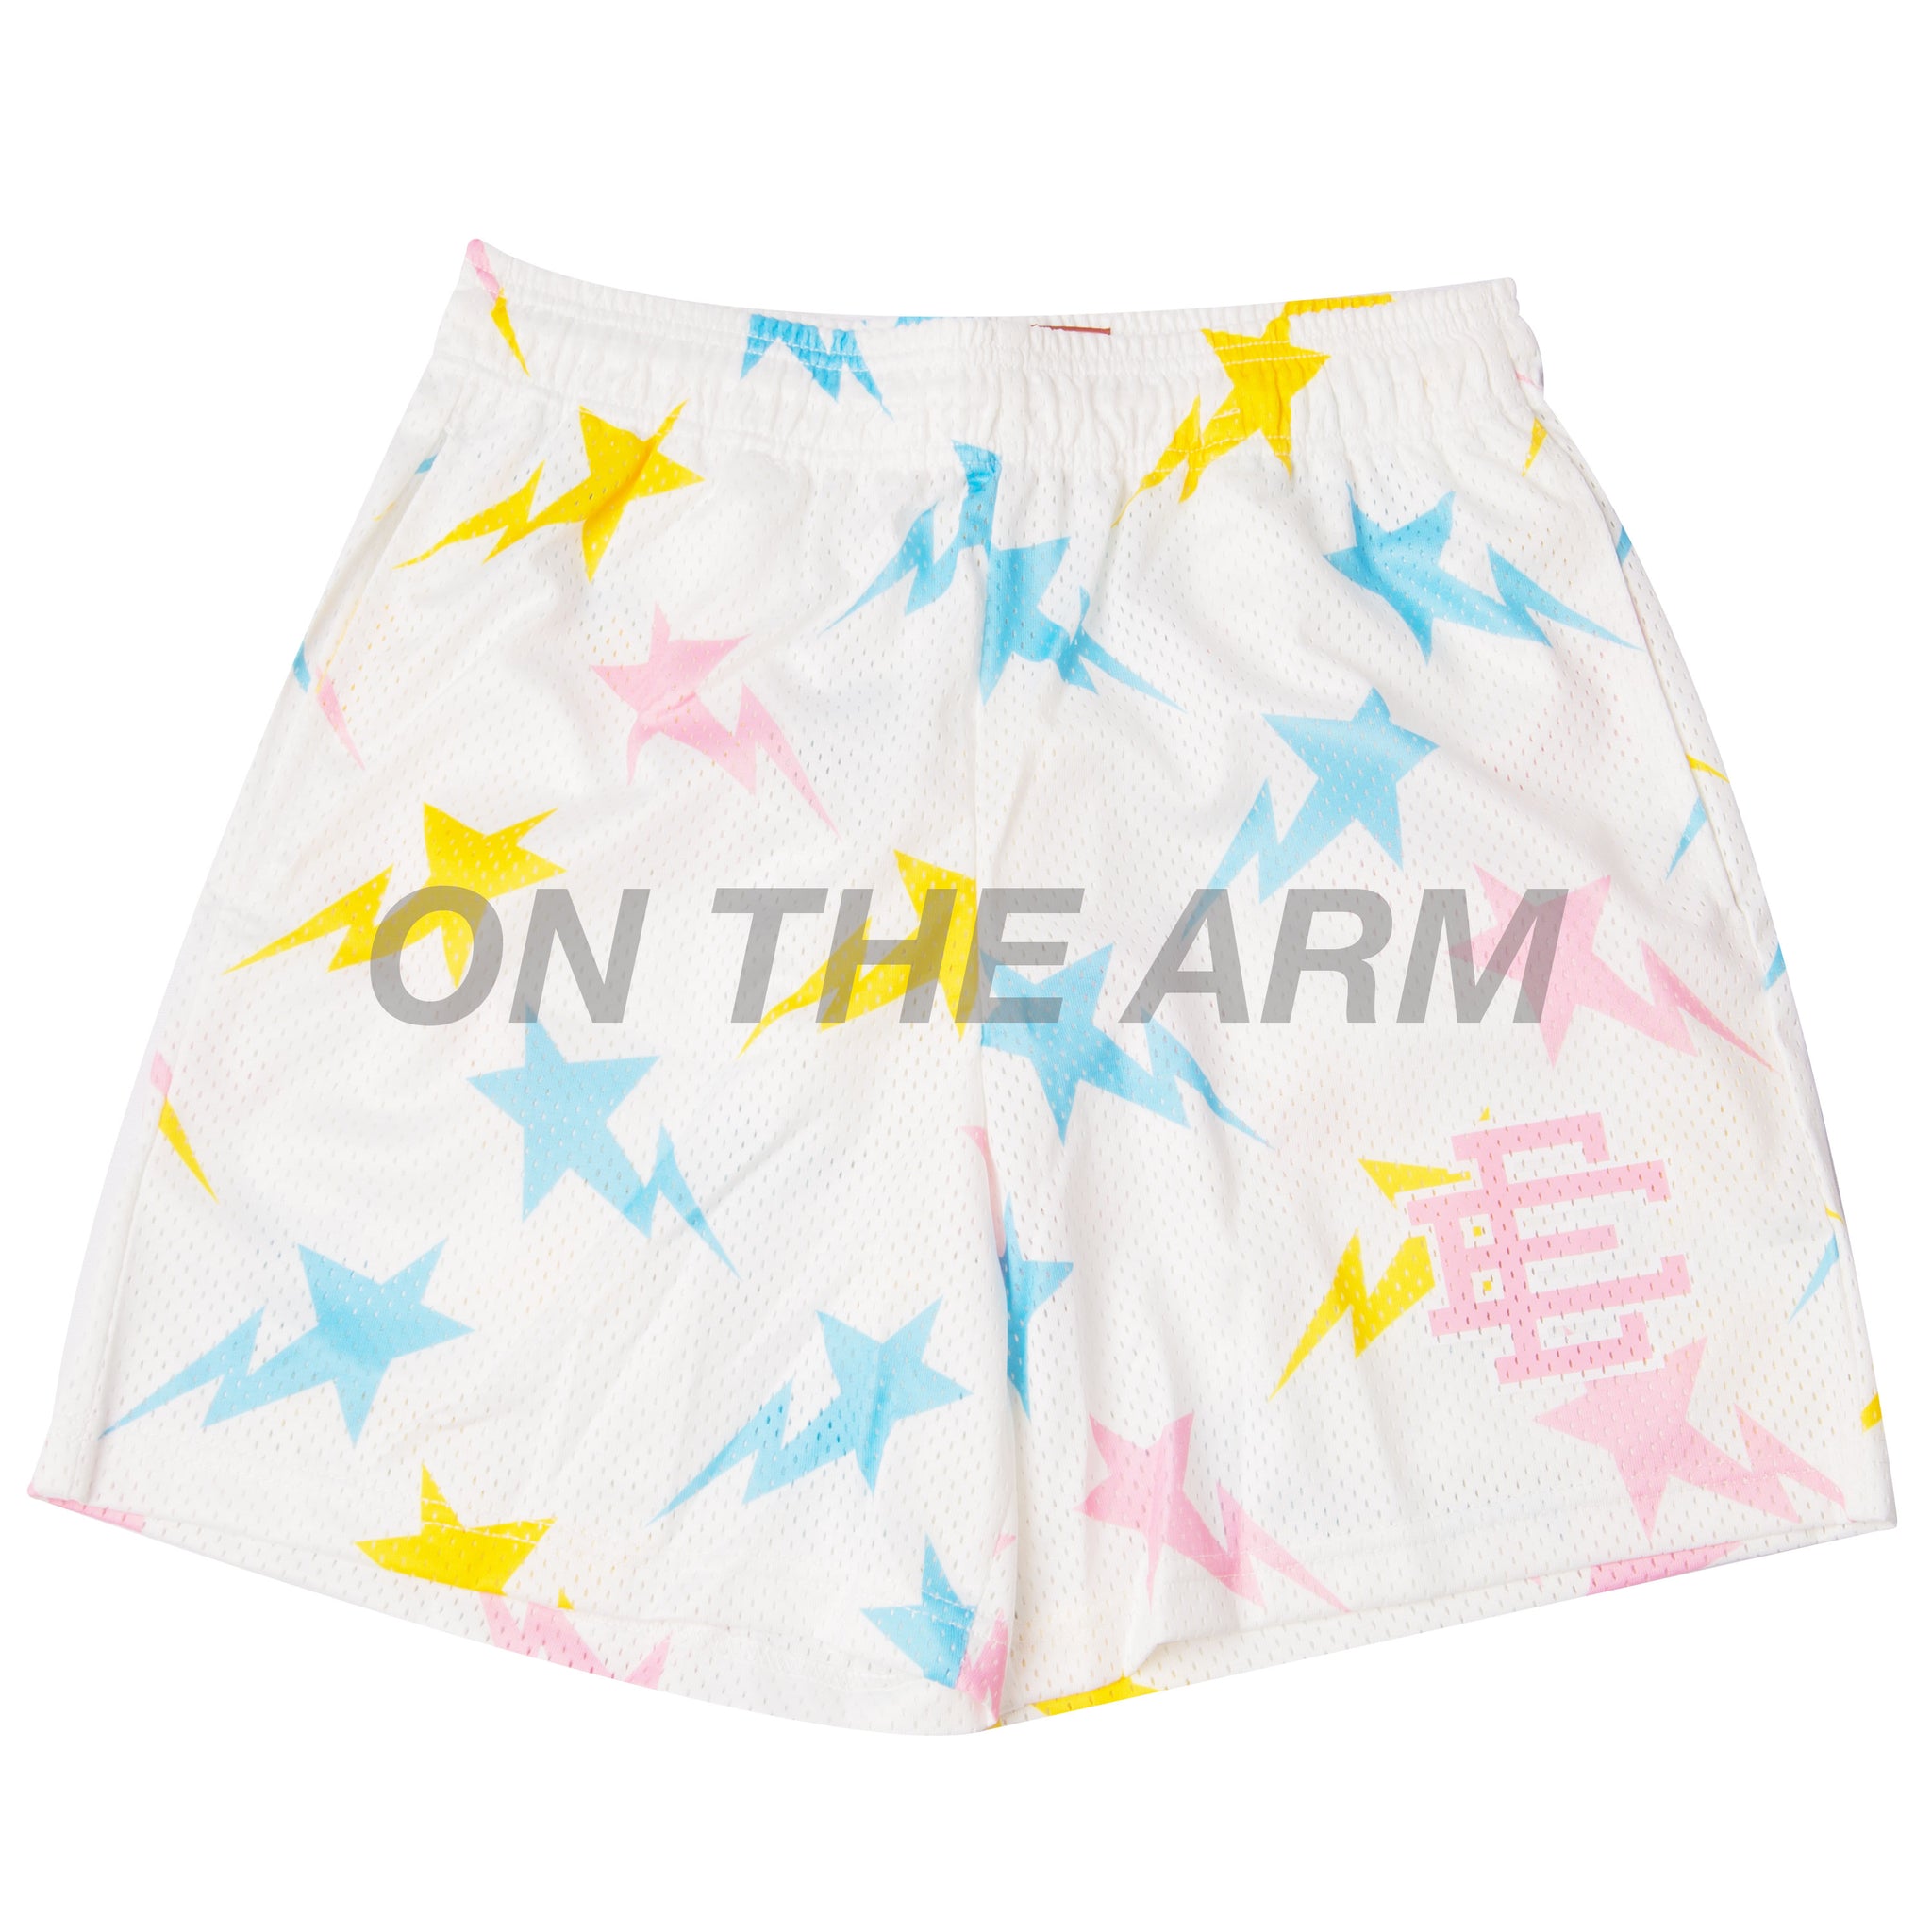 Bape White/Yellow/Pink Eric Emanuel Basic Shorts